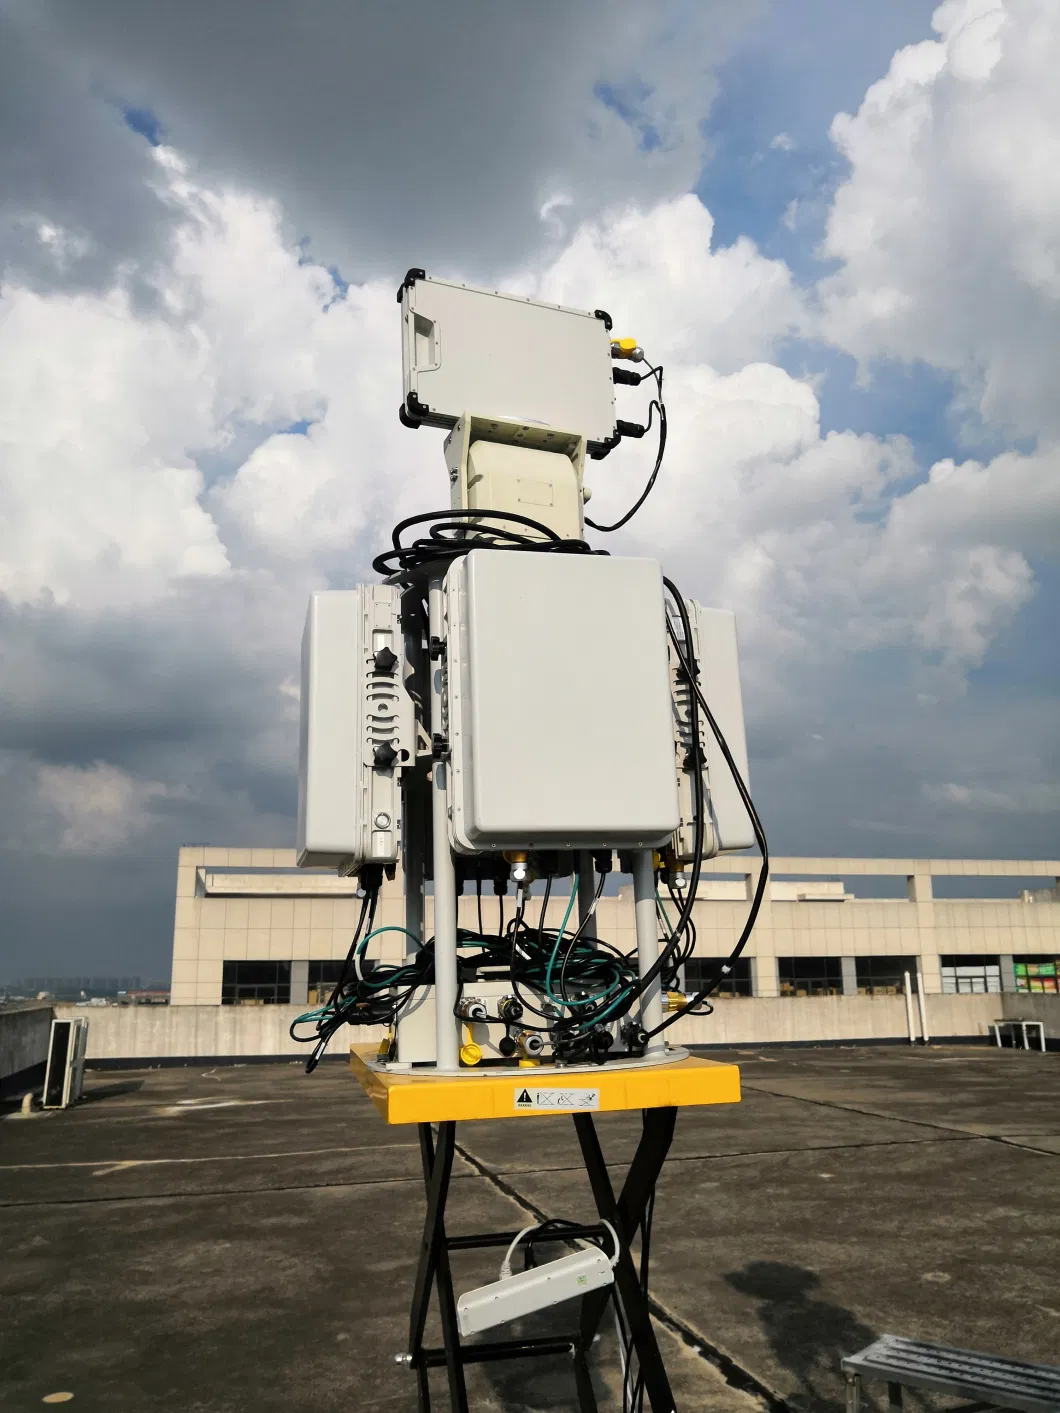 Medium Range Land Surveillance Radar to Detect Intruders in Real-Time for Critical Facilities to Detect Unwanted Intruders and Stop Them at The Perimeter